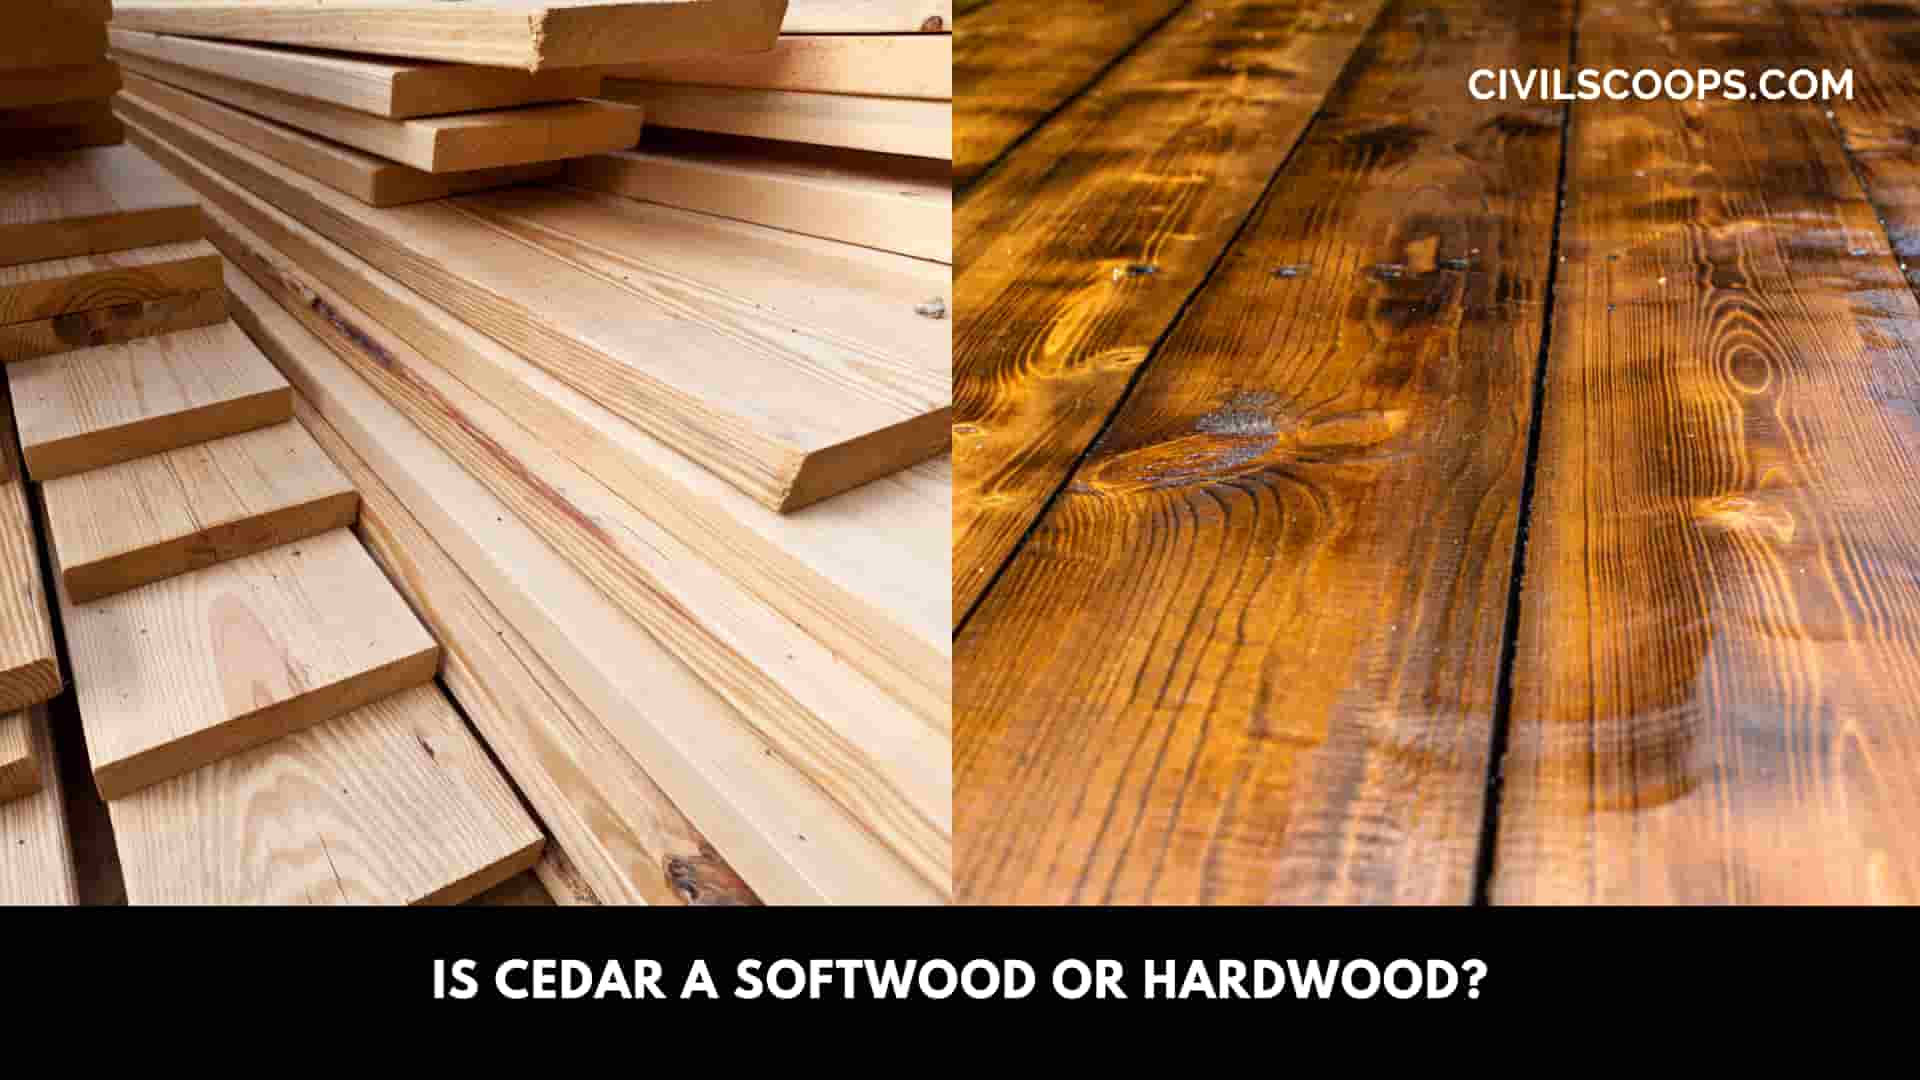 Is Cedar a Softwood or Hardwood?